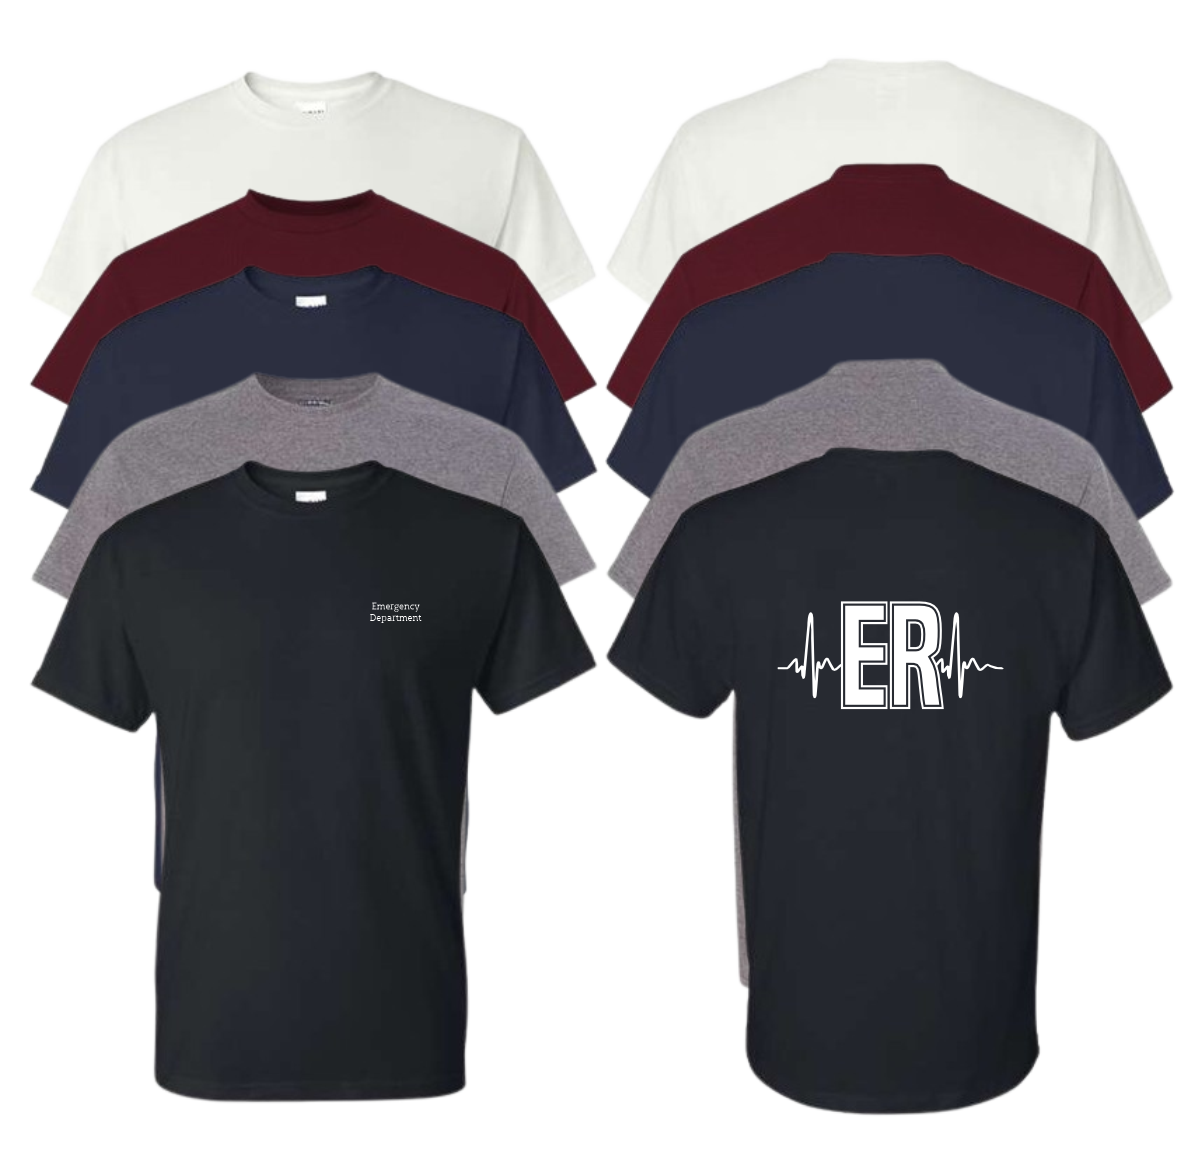 Emergency Department Rhythm Cotton T-Shirt (+ options)